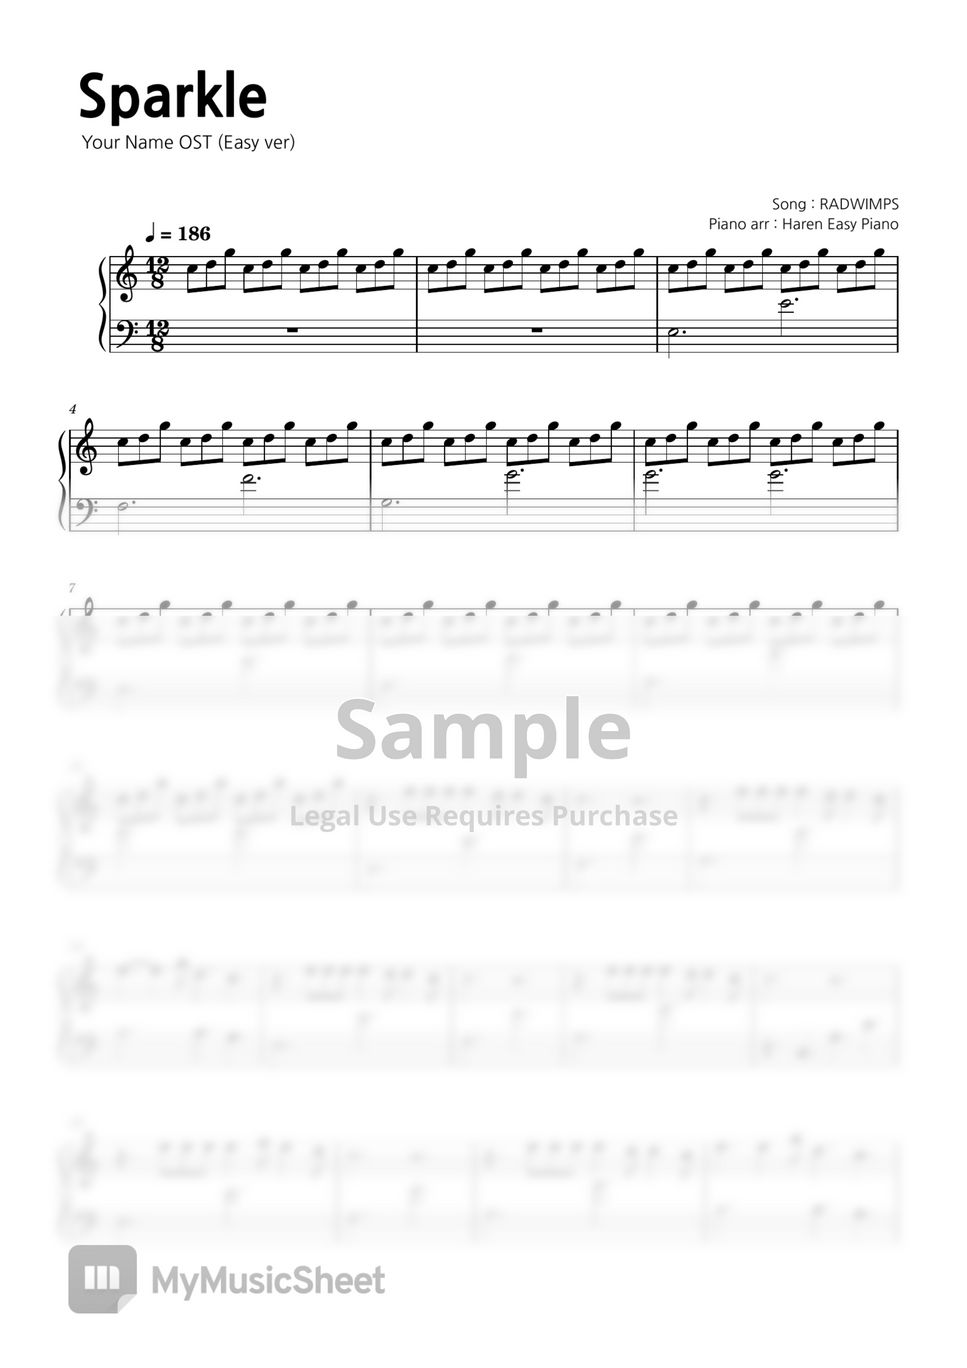 RADWIMPS - Sparkle (Your Name(Kimi no Na wa) OST Easy ver) by Haren Easy Piano